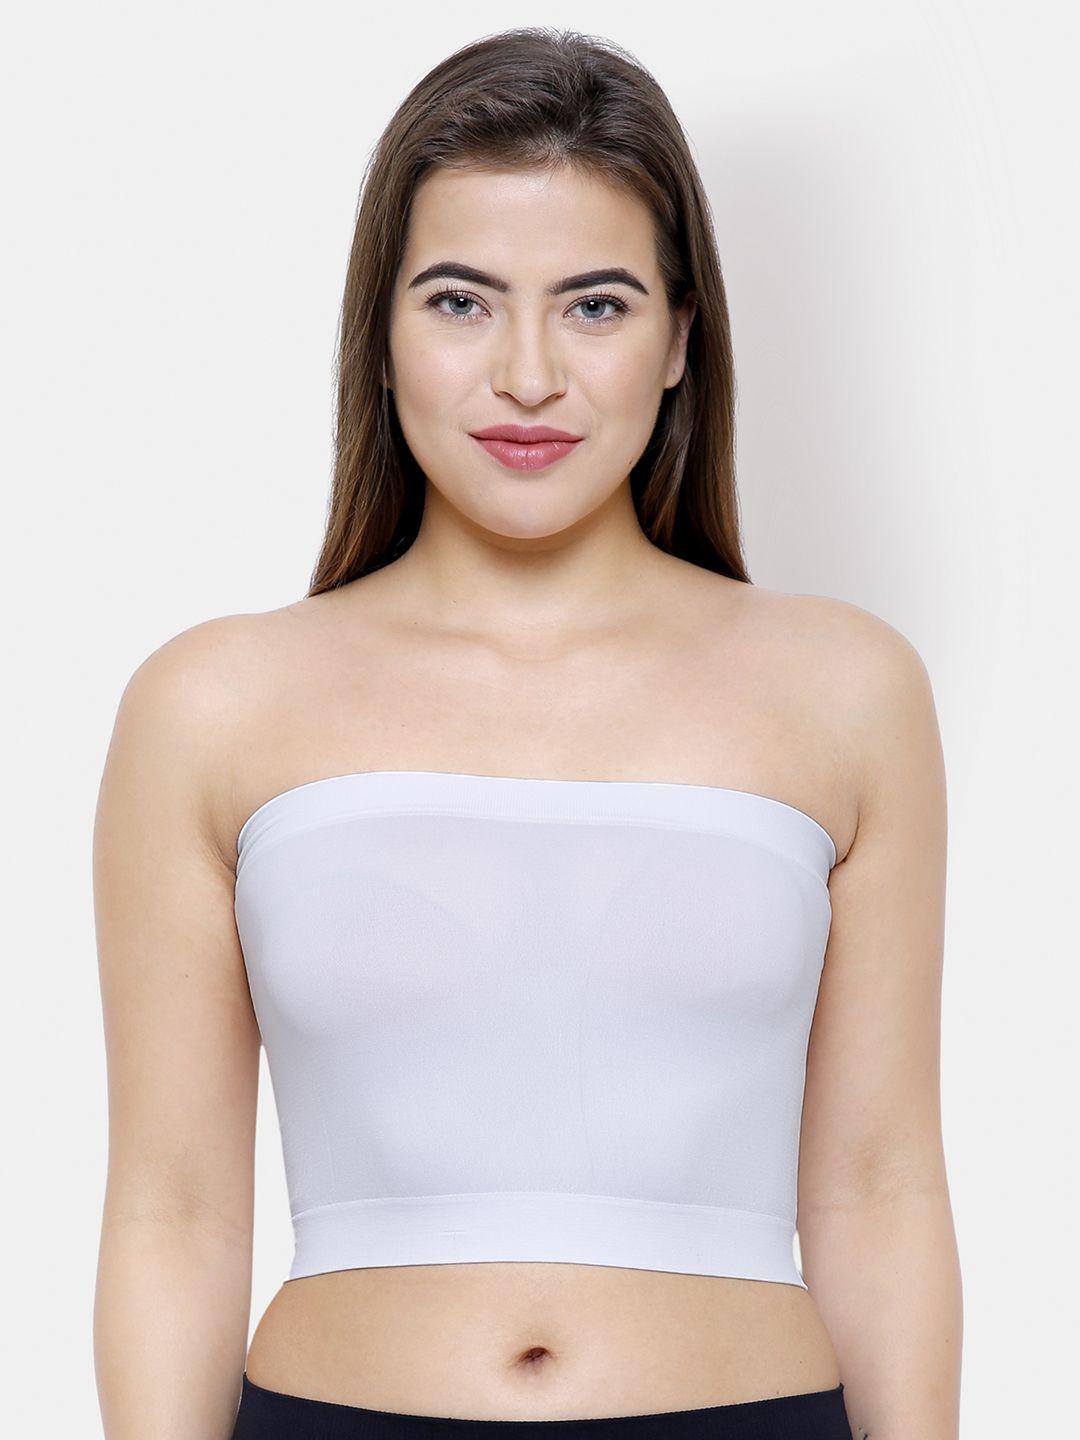 fashionrack-women-white-solid-strapless-camisole-4018